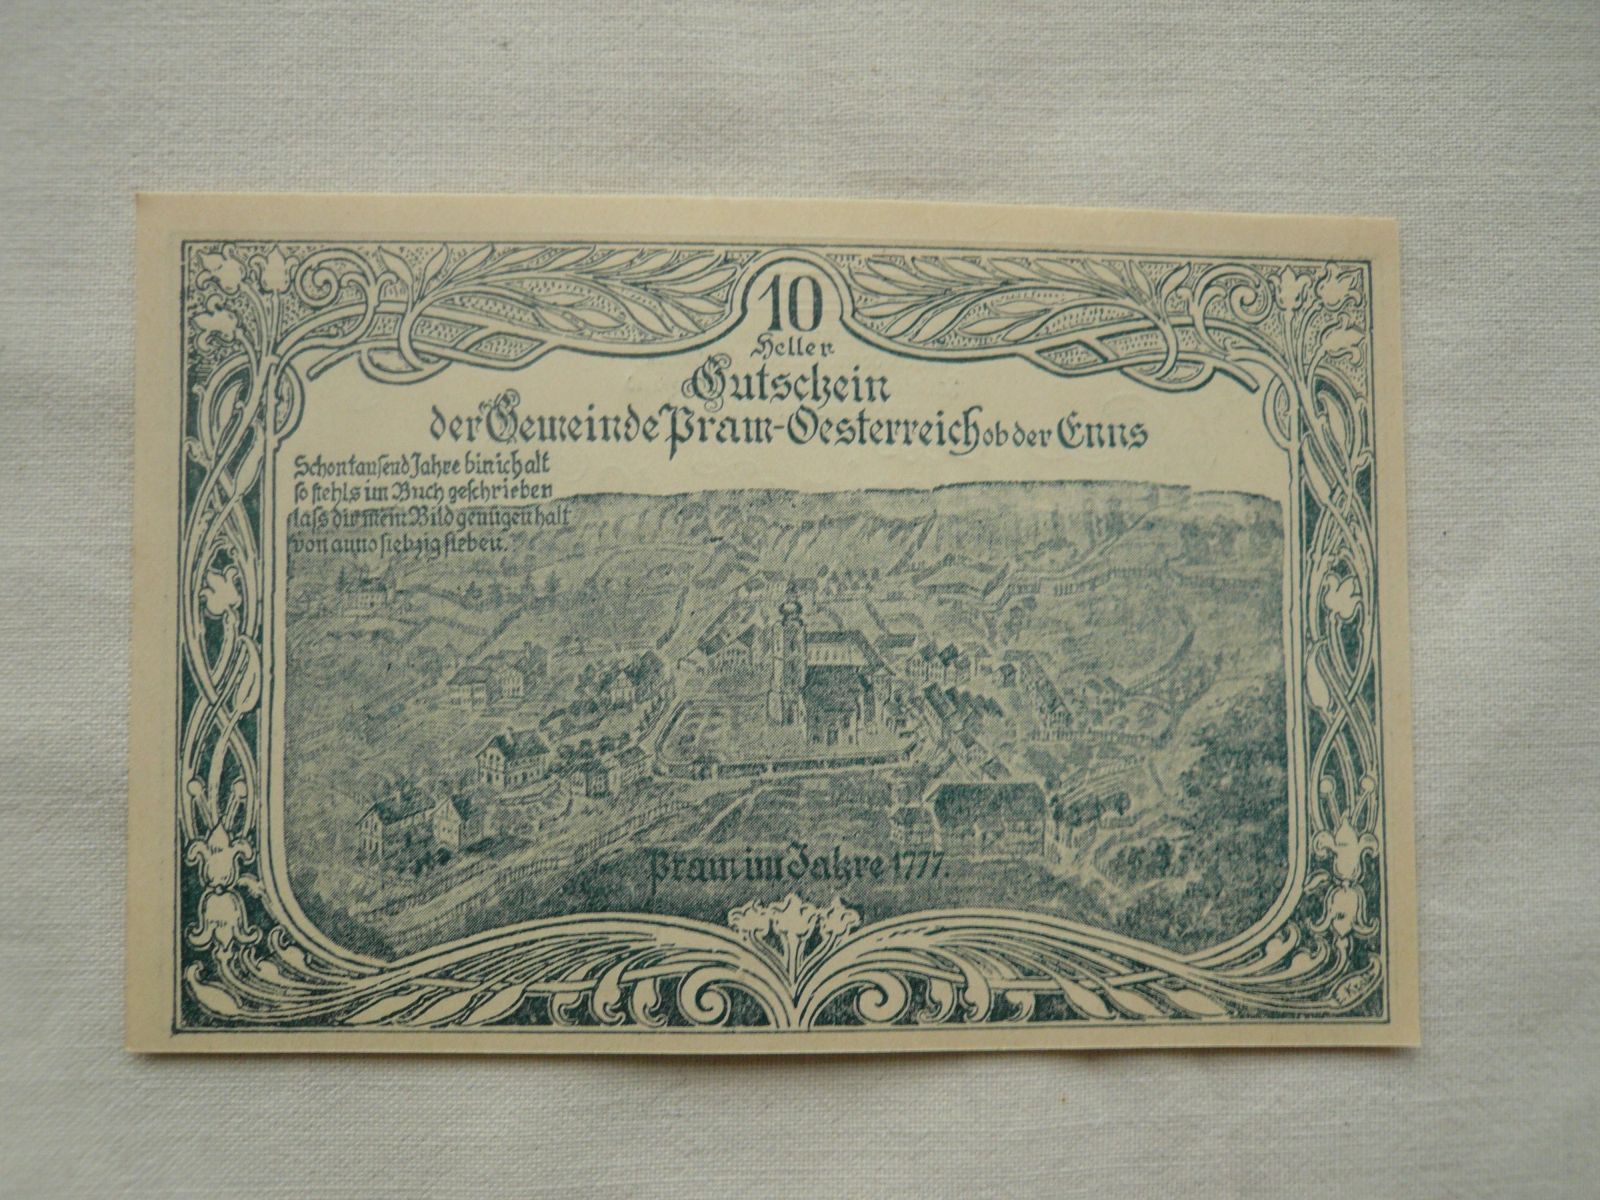 10 Heller, 1920 nouzovka, Rakousko